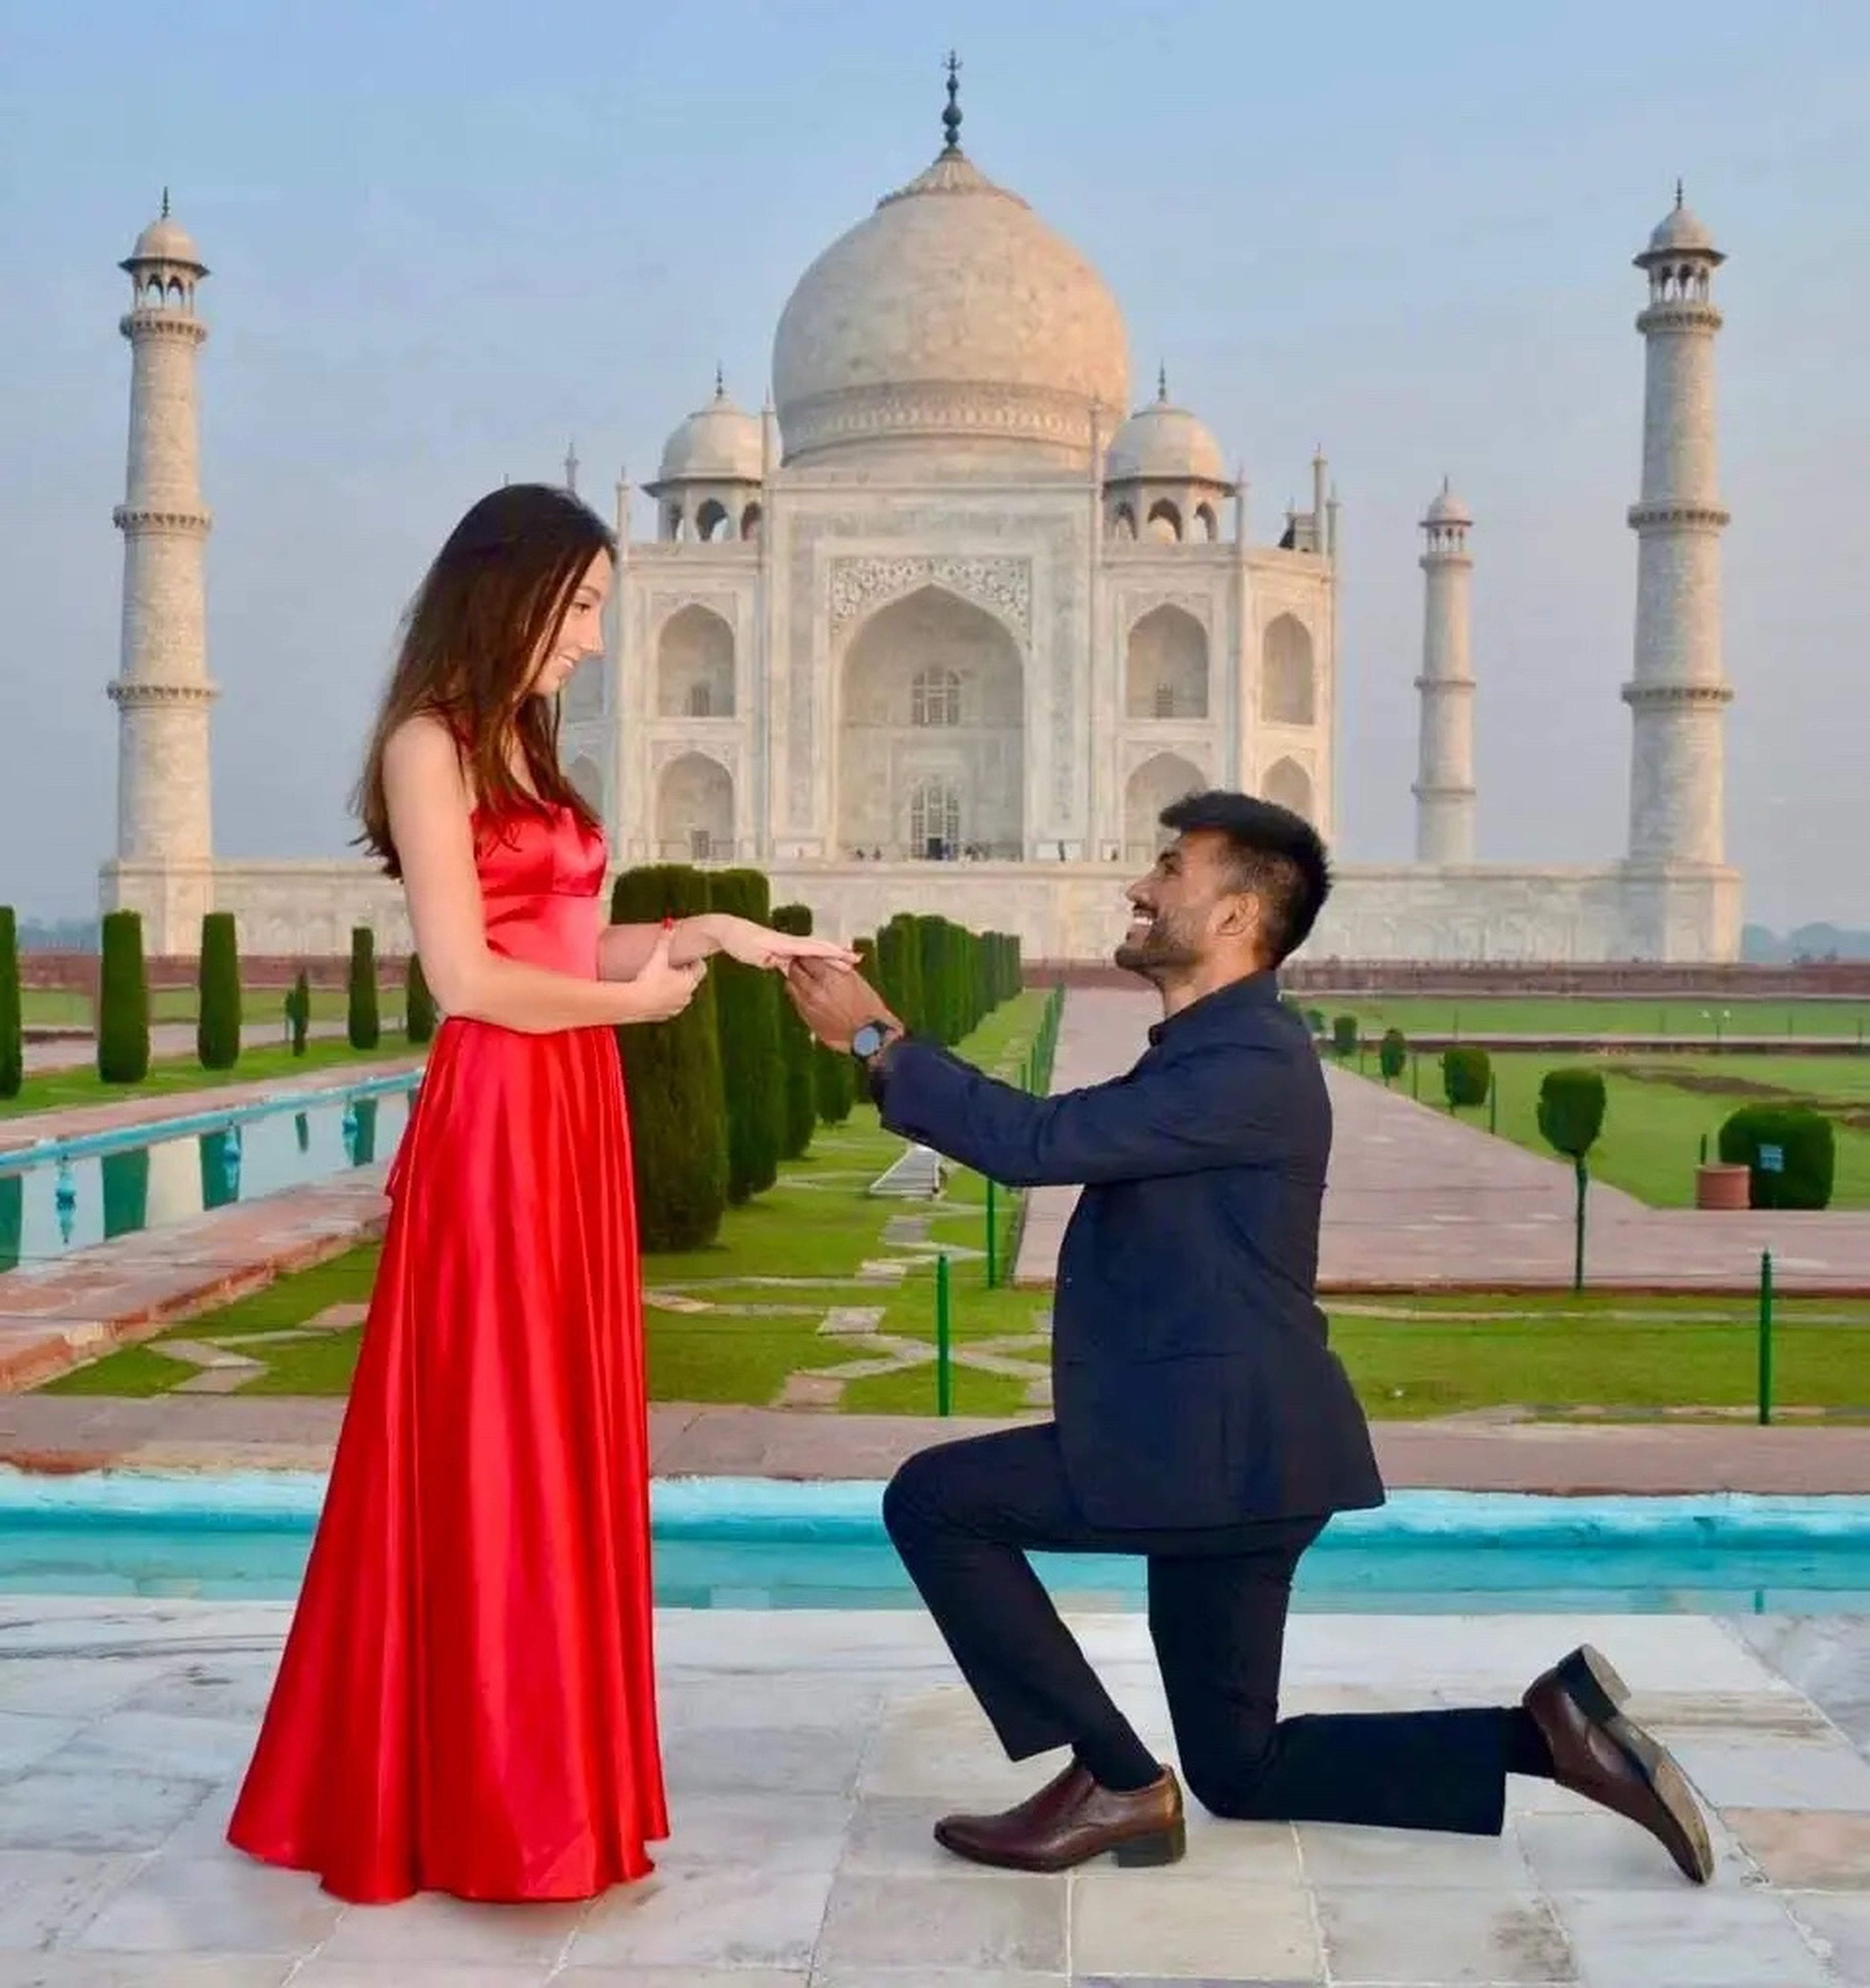 George le propuso matrimonio a su novia delante del  Taj Mahal.